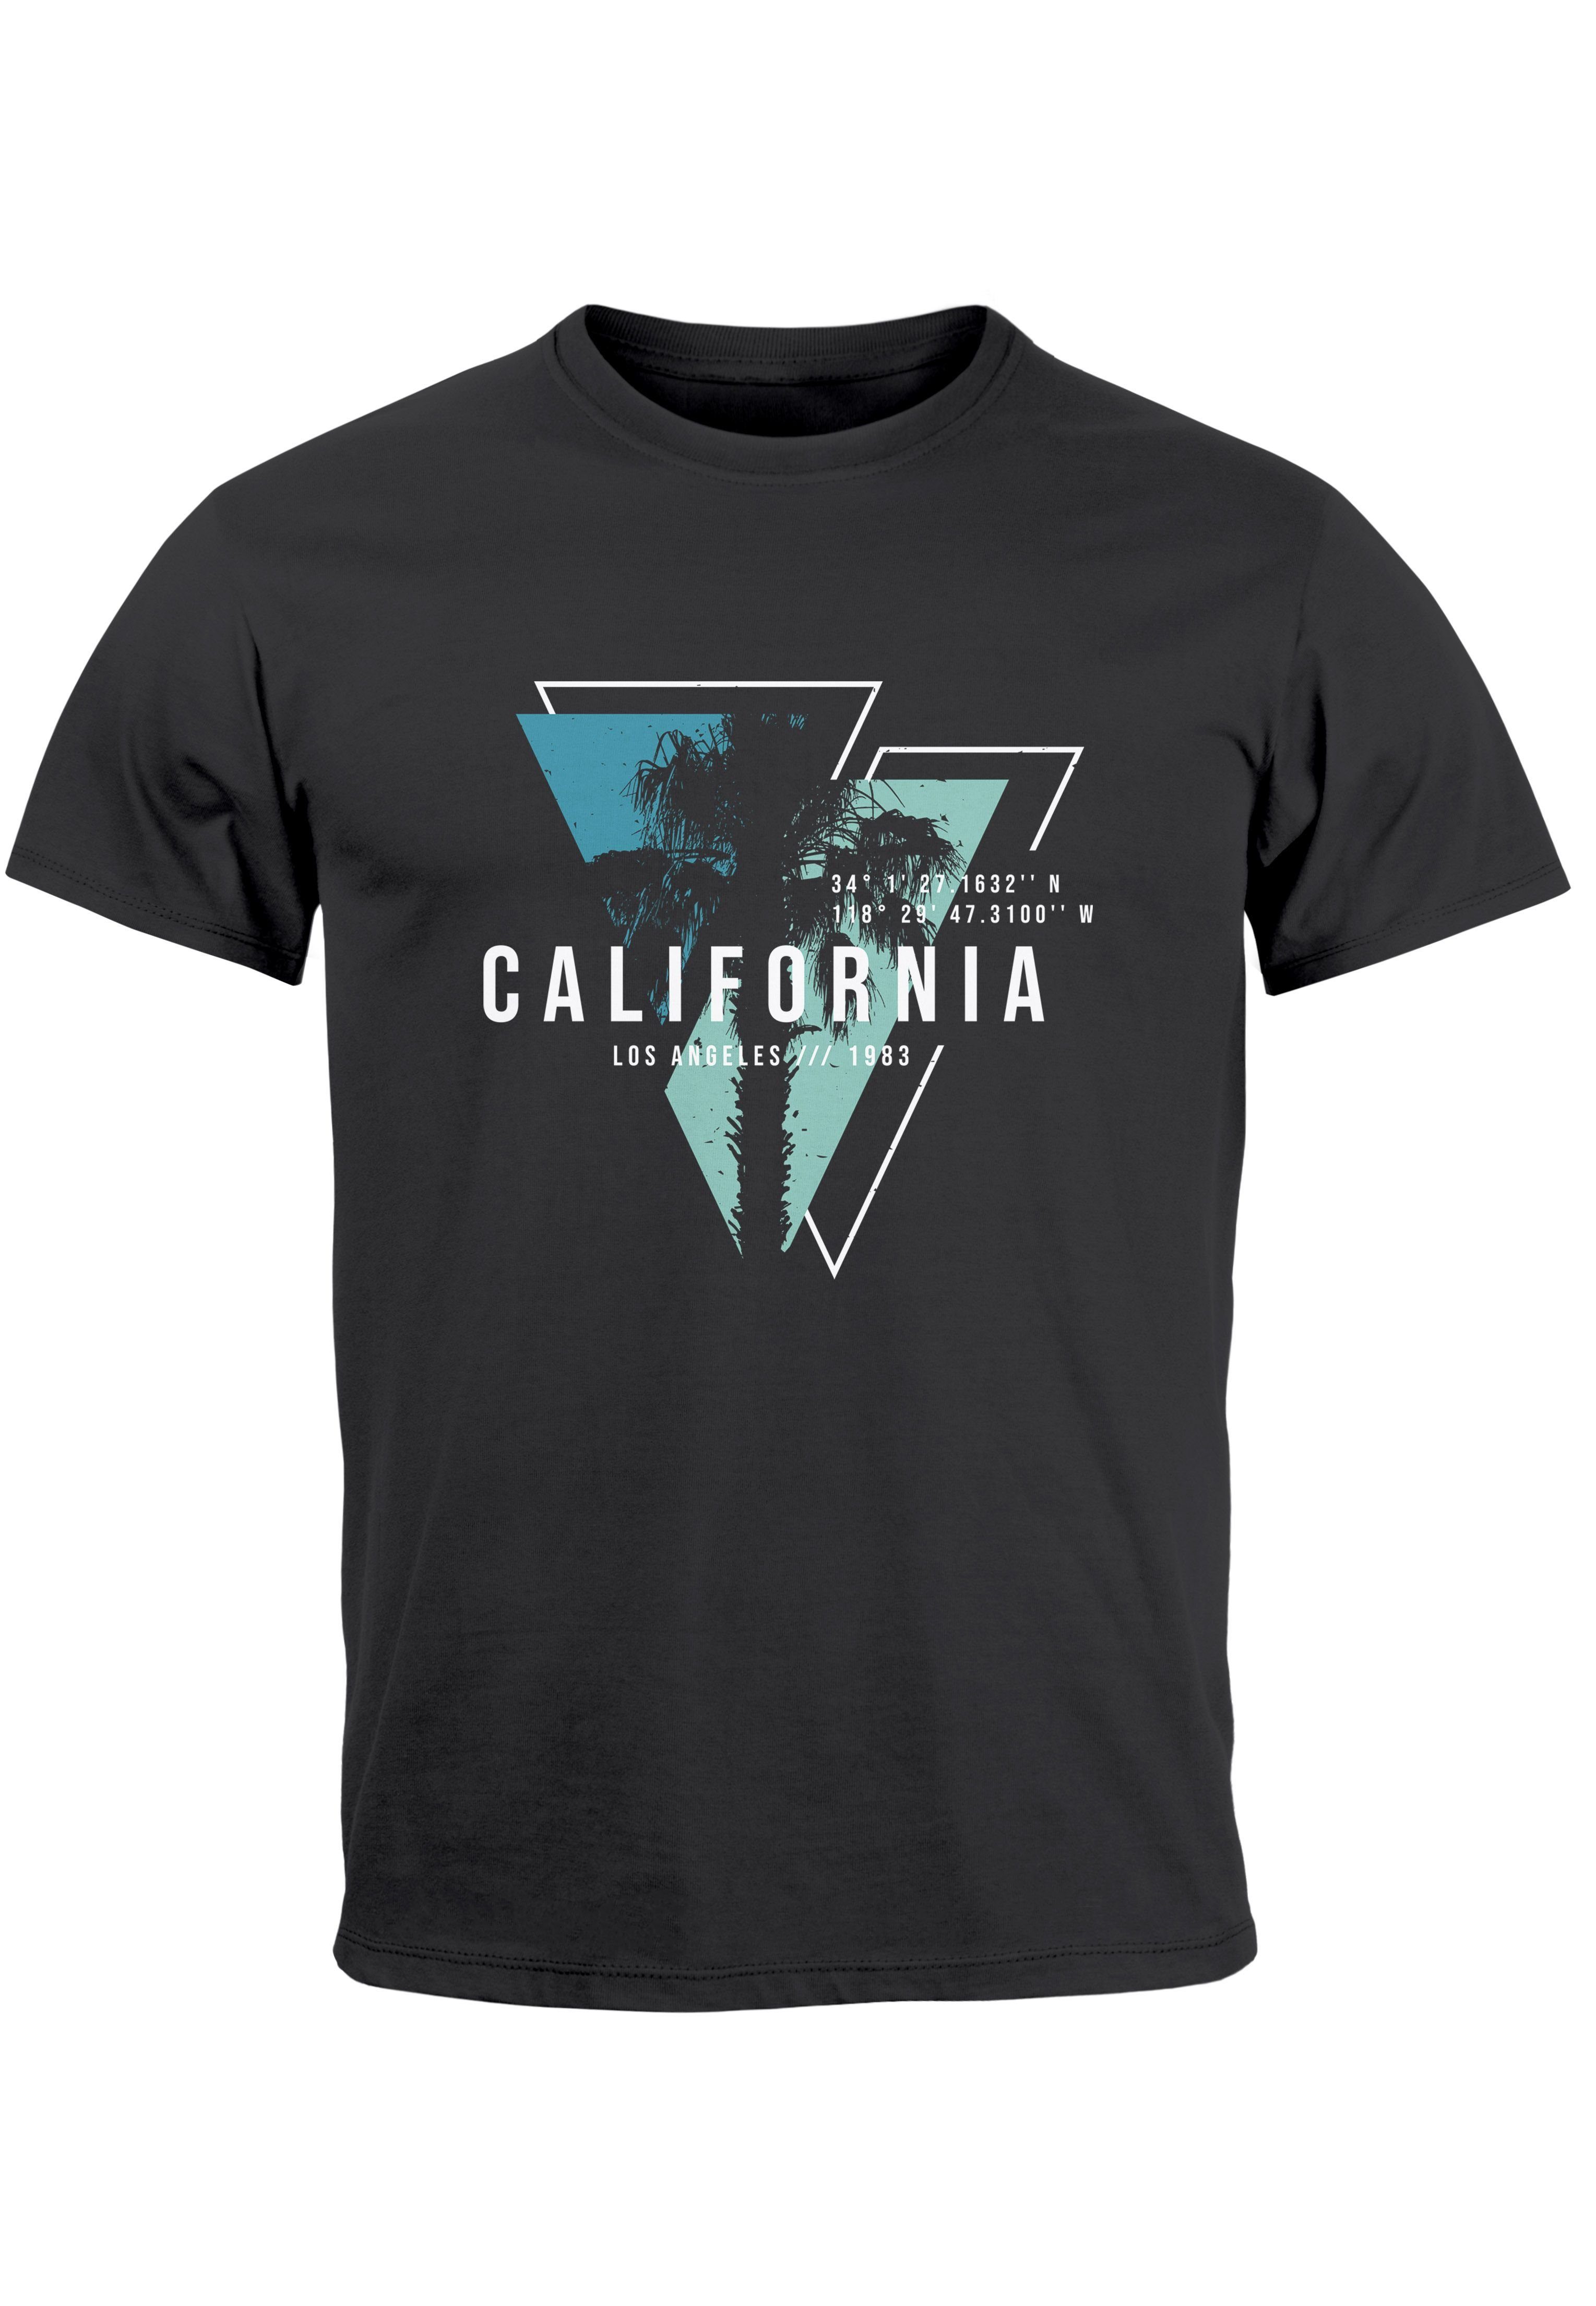 Sommer Los T-Shirt Neverless Fashion Print-Shirt Herren Surfing Angeles California Print Motiv mit USA anthrazit-blau